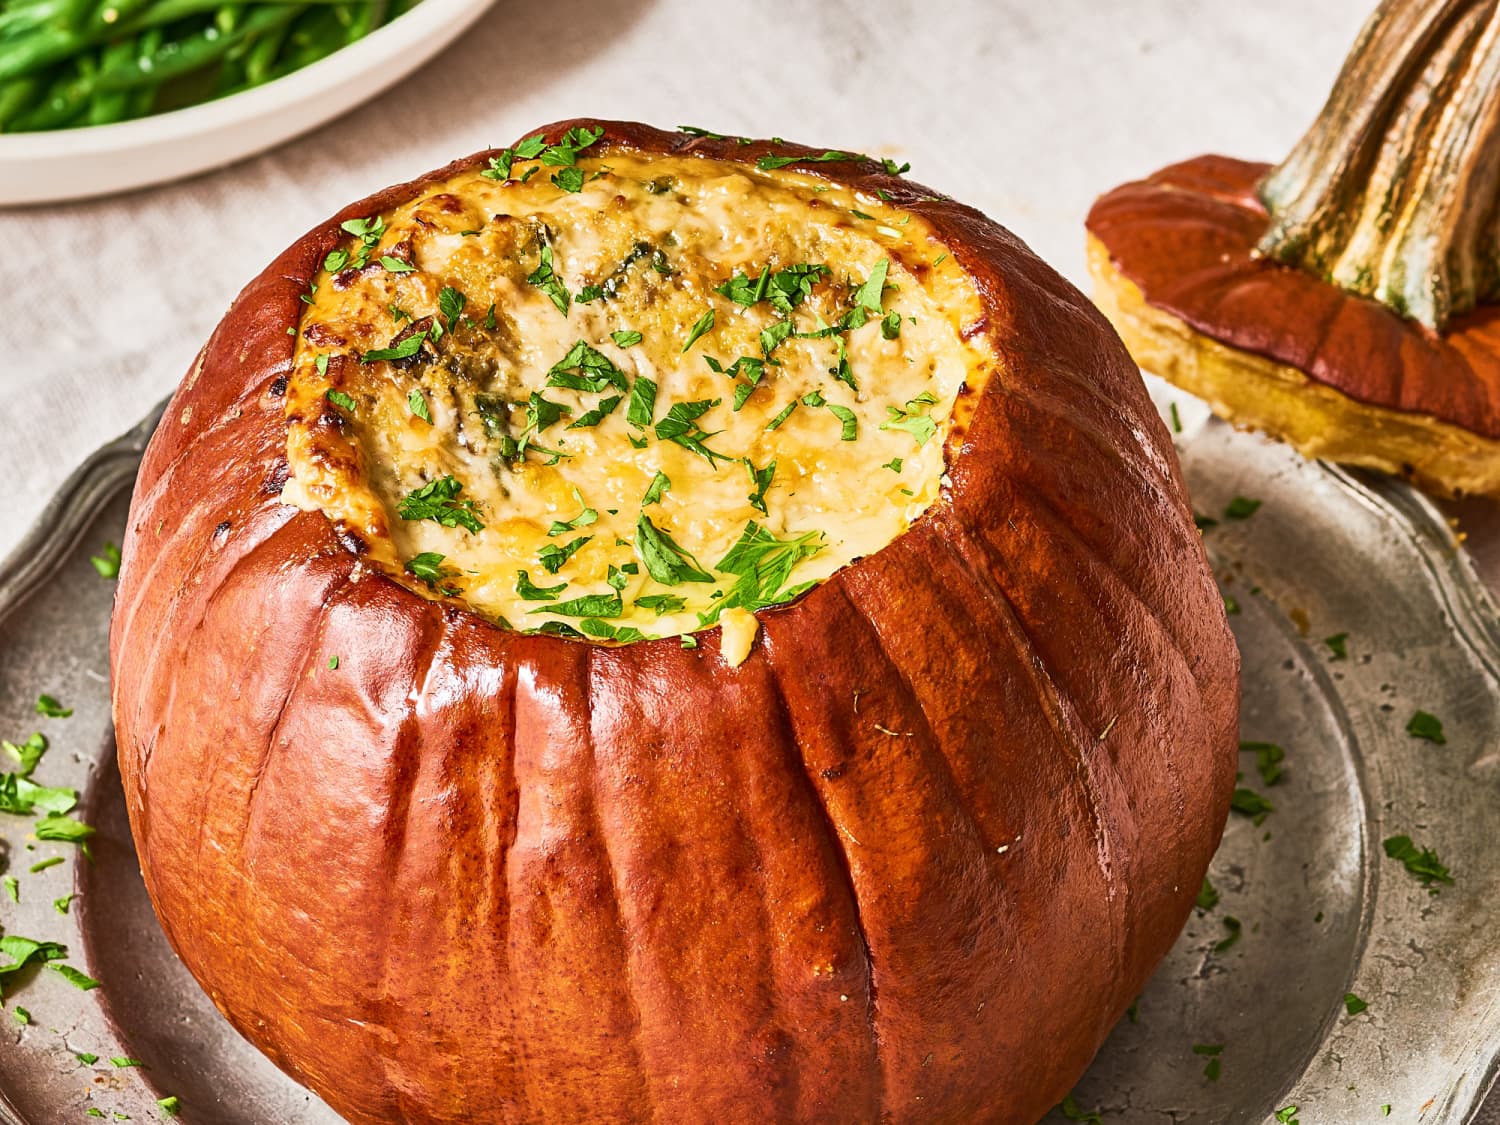 Alternative Thanksgiving Meals Without Turkey - Sheet Pan ...